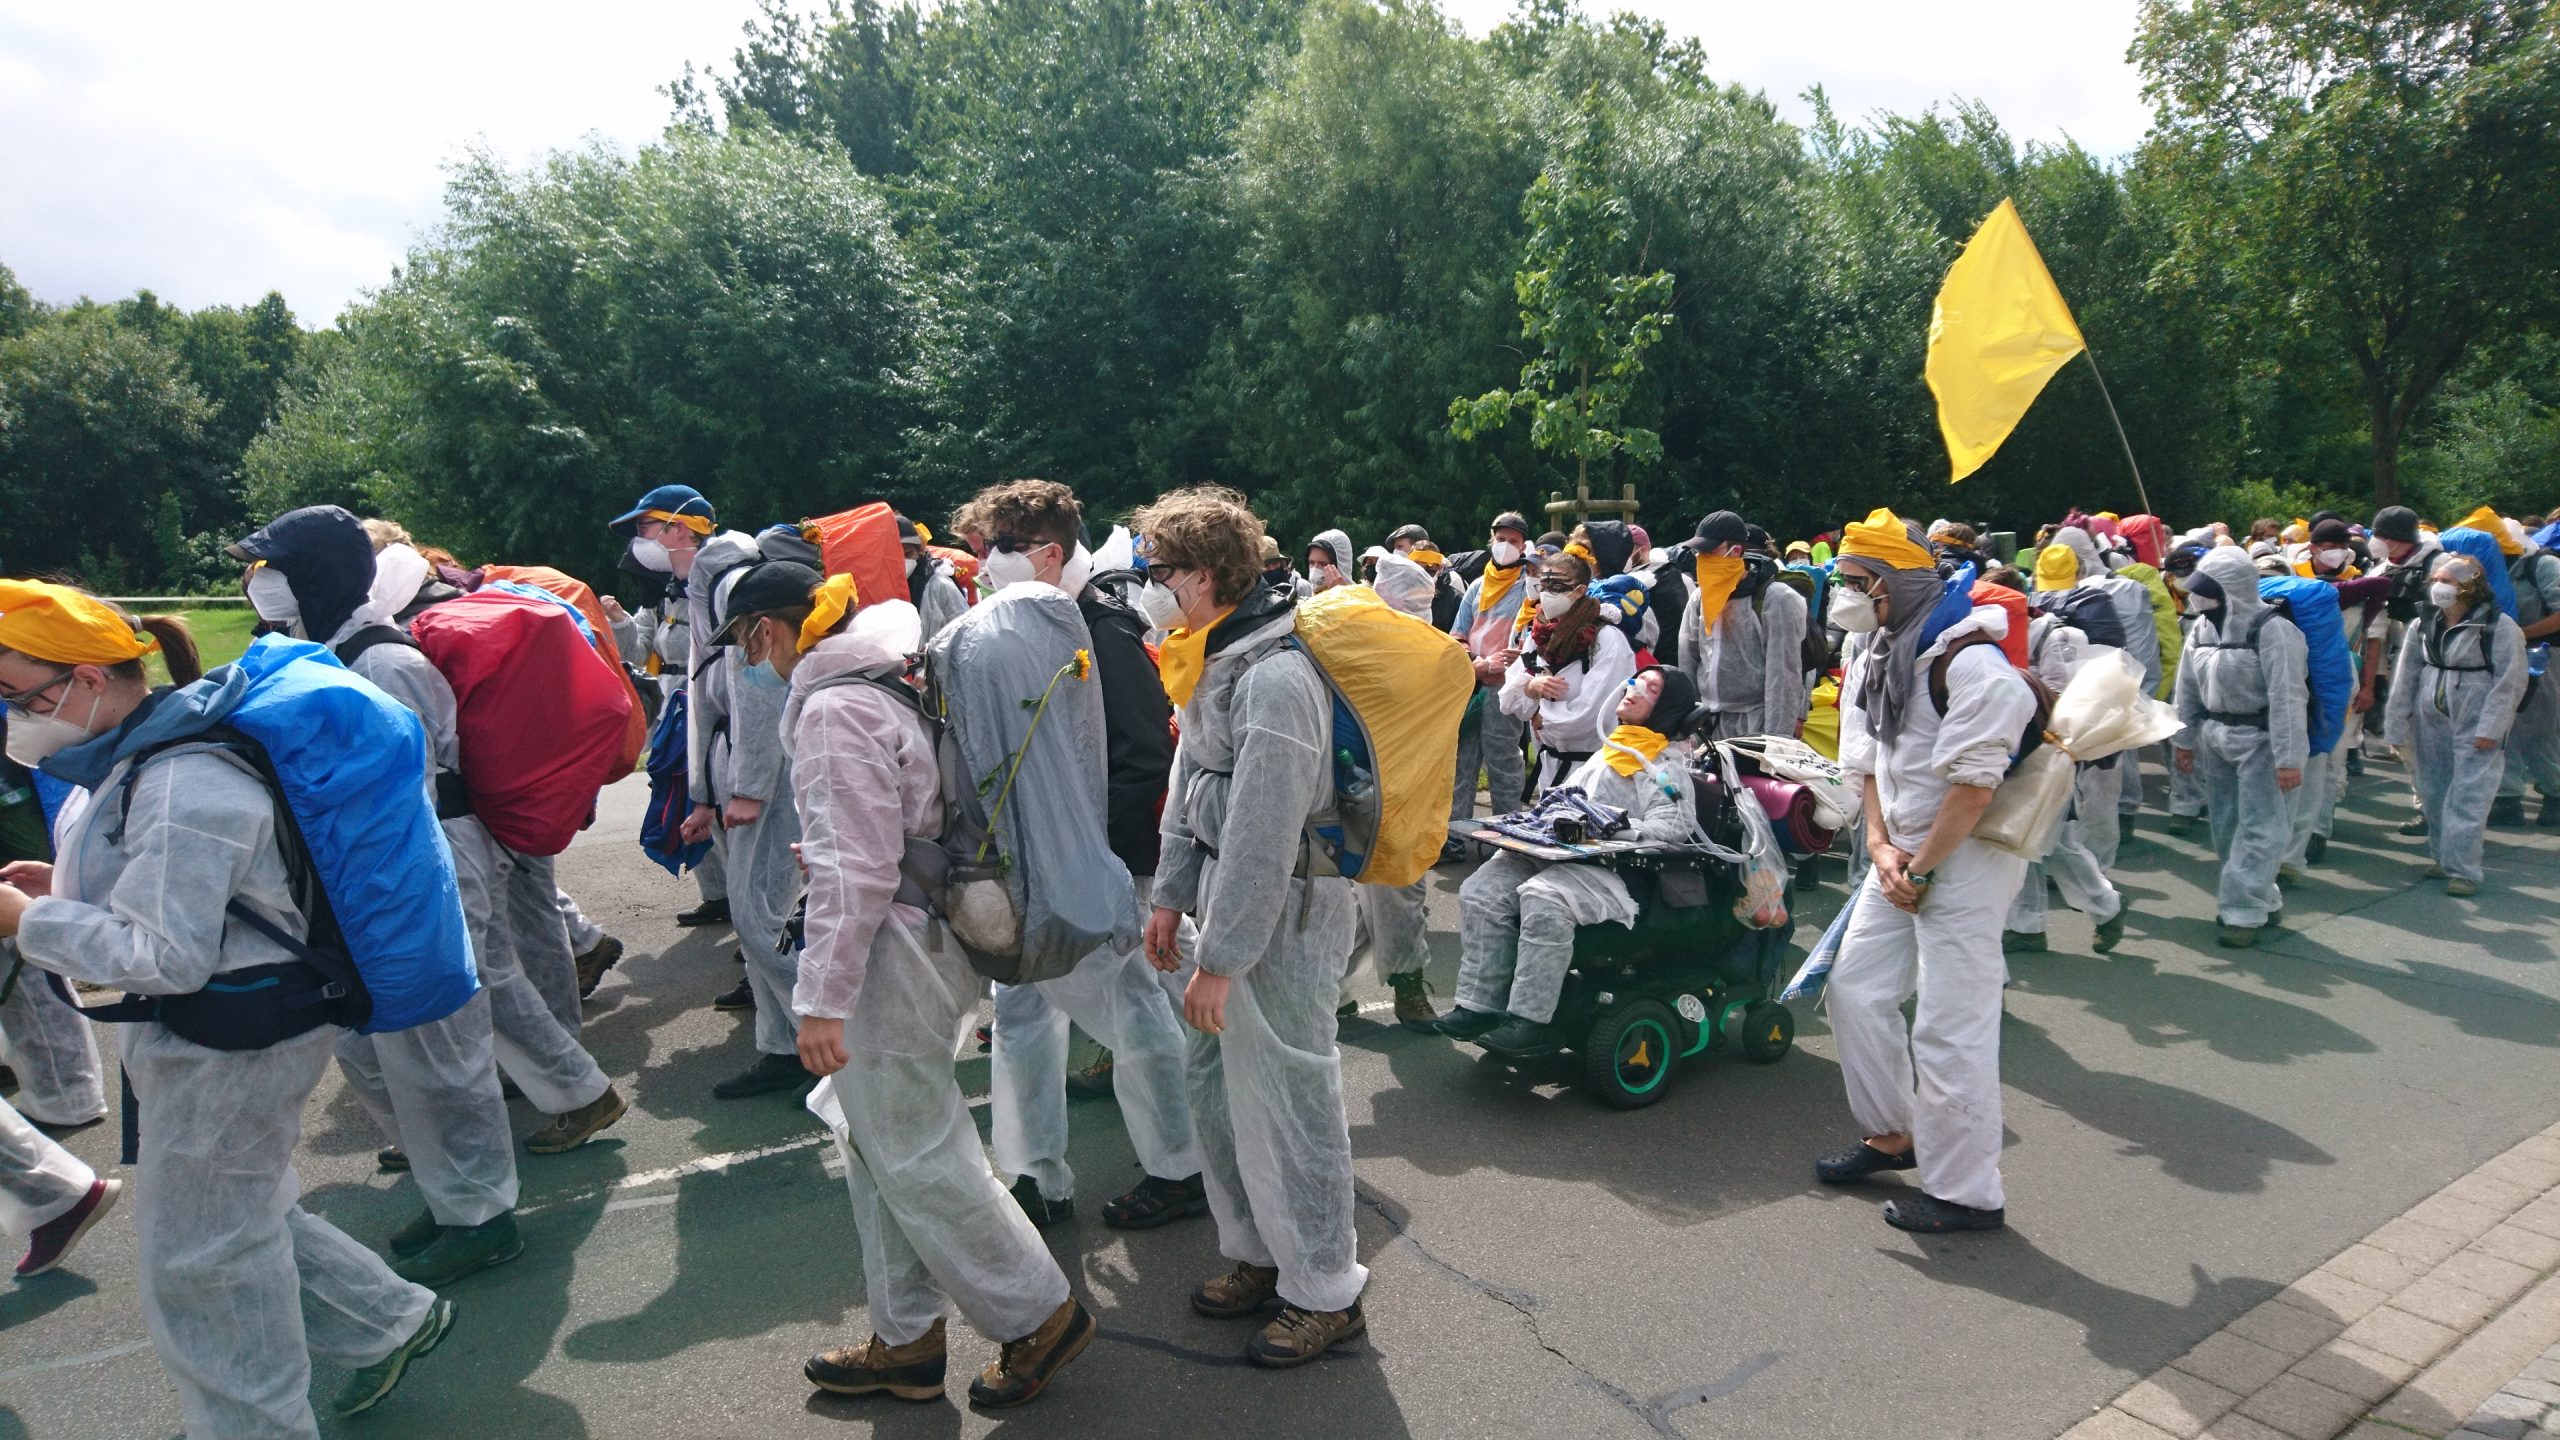 Clad in white jump suits, several ende gelande activists march together